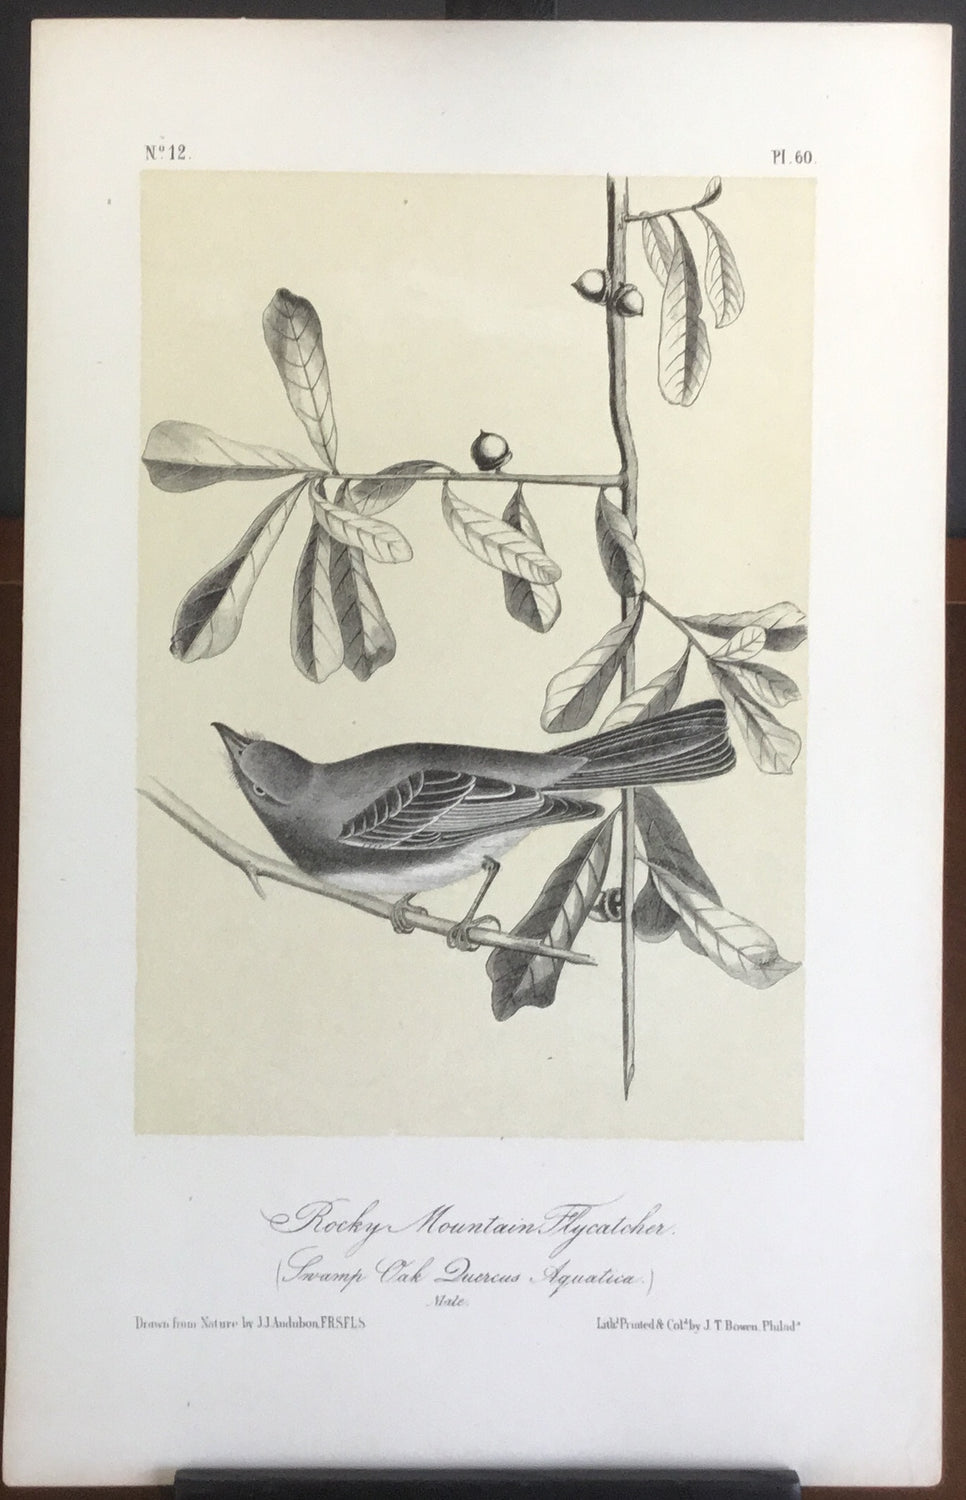 Audubon Octavo Rocky Mountain Flycatcher, plate 60, uncolored test sheet. 7 x 11